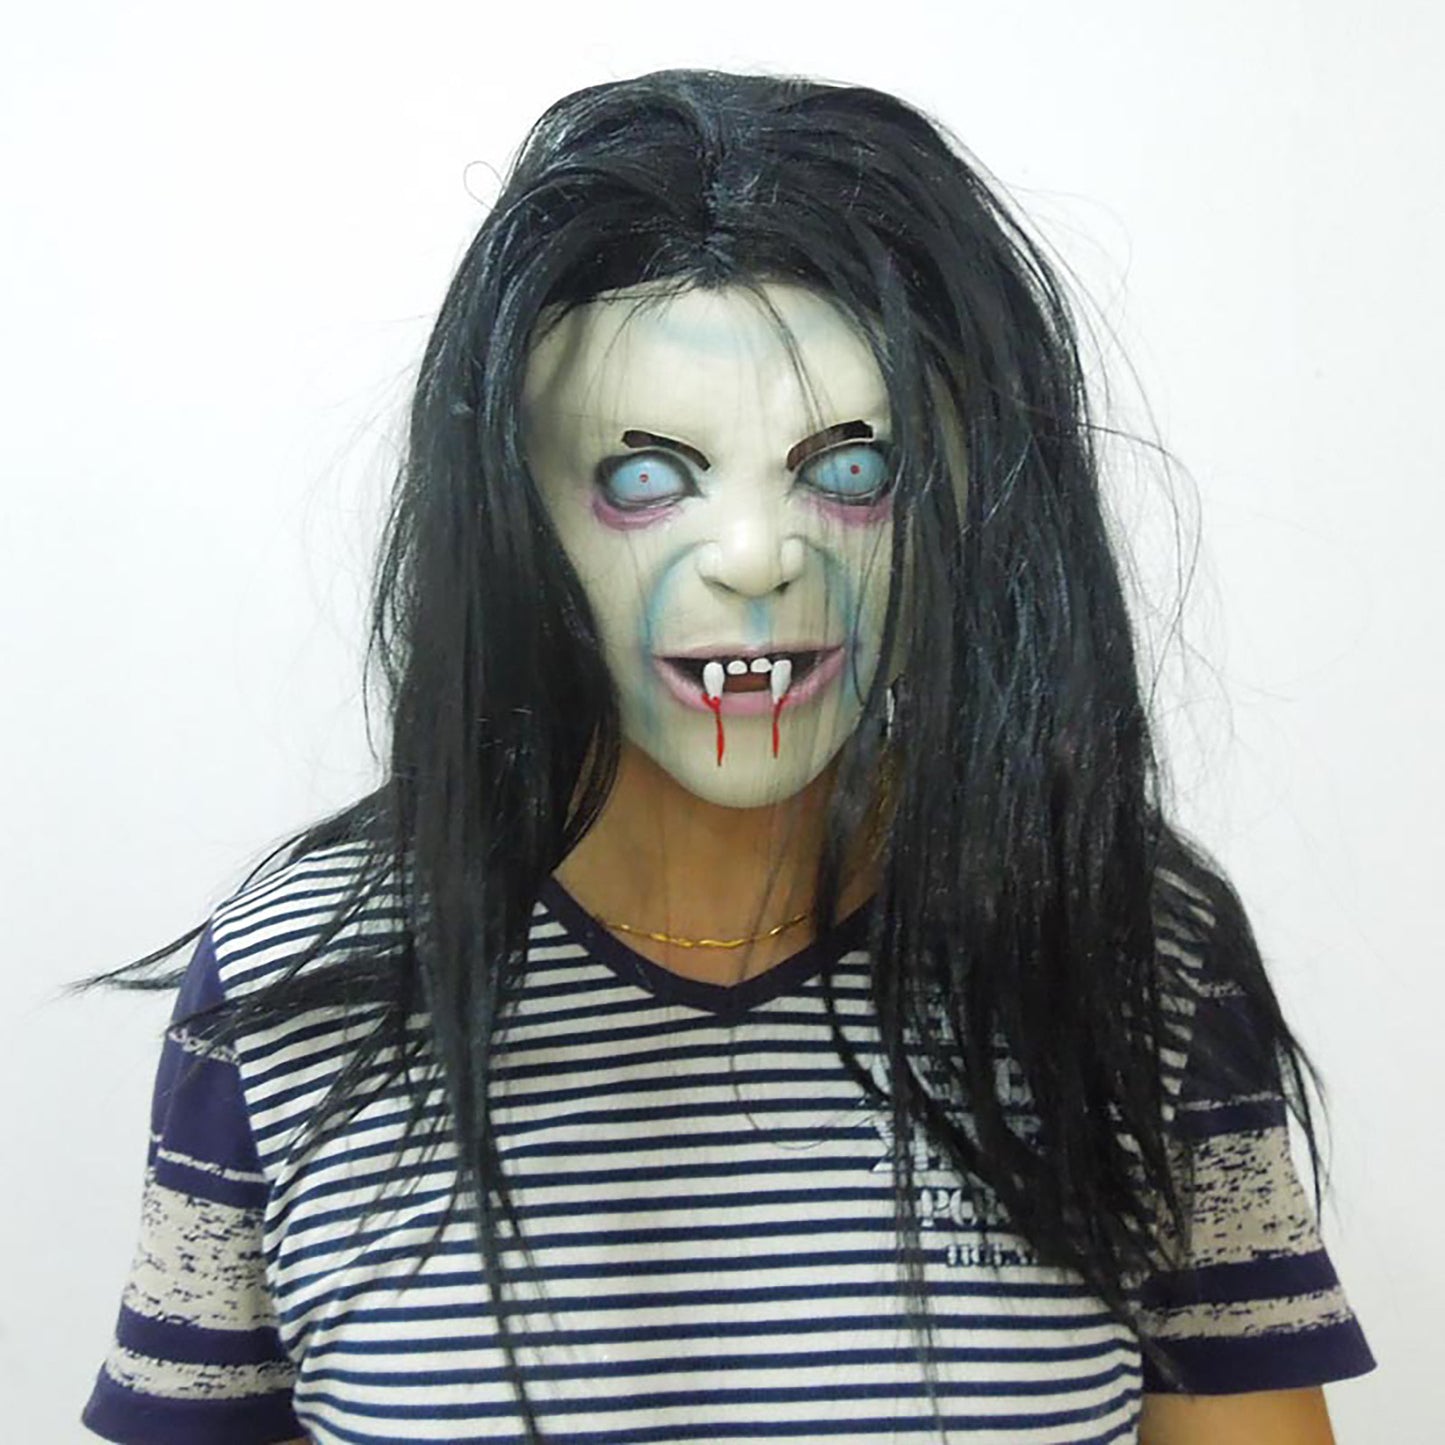 New Halloween Horror Mask Headgear Funny